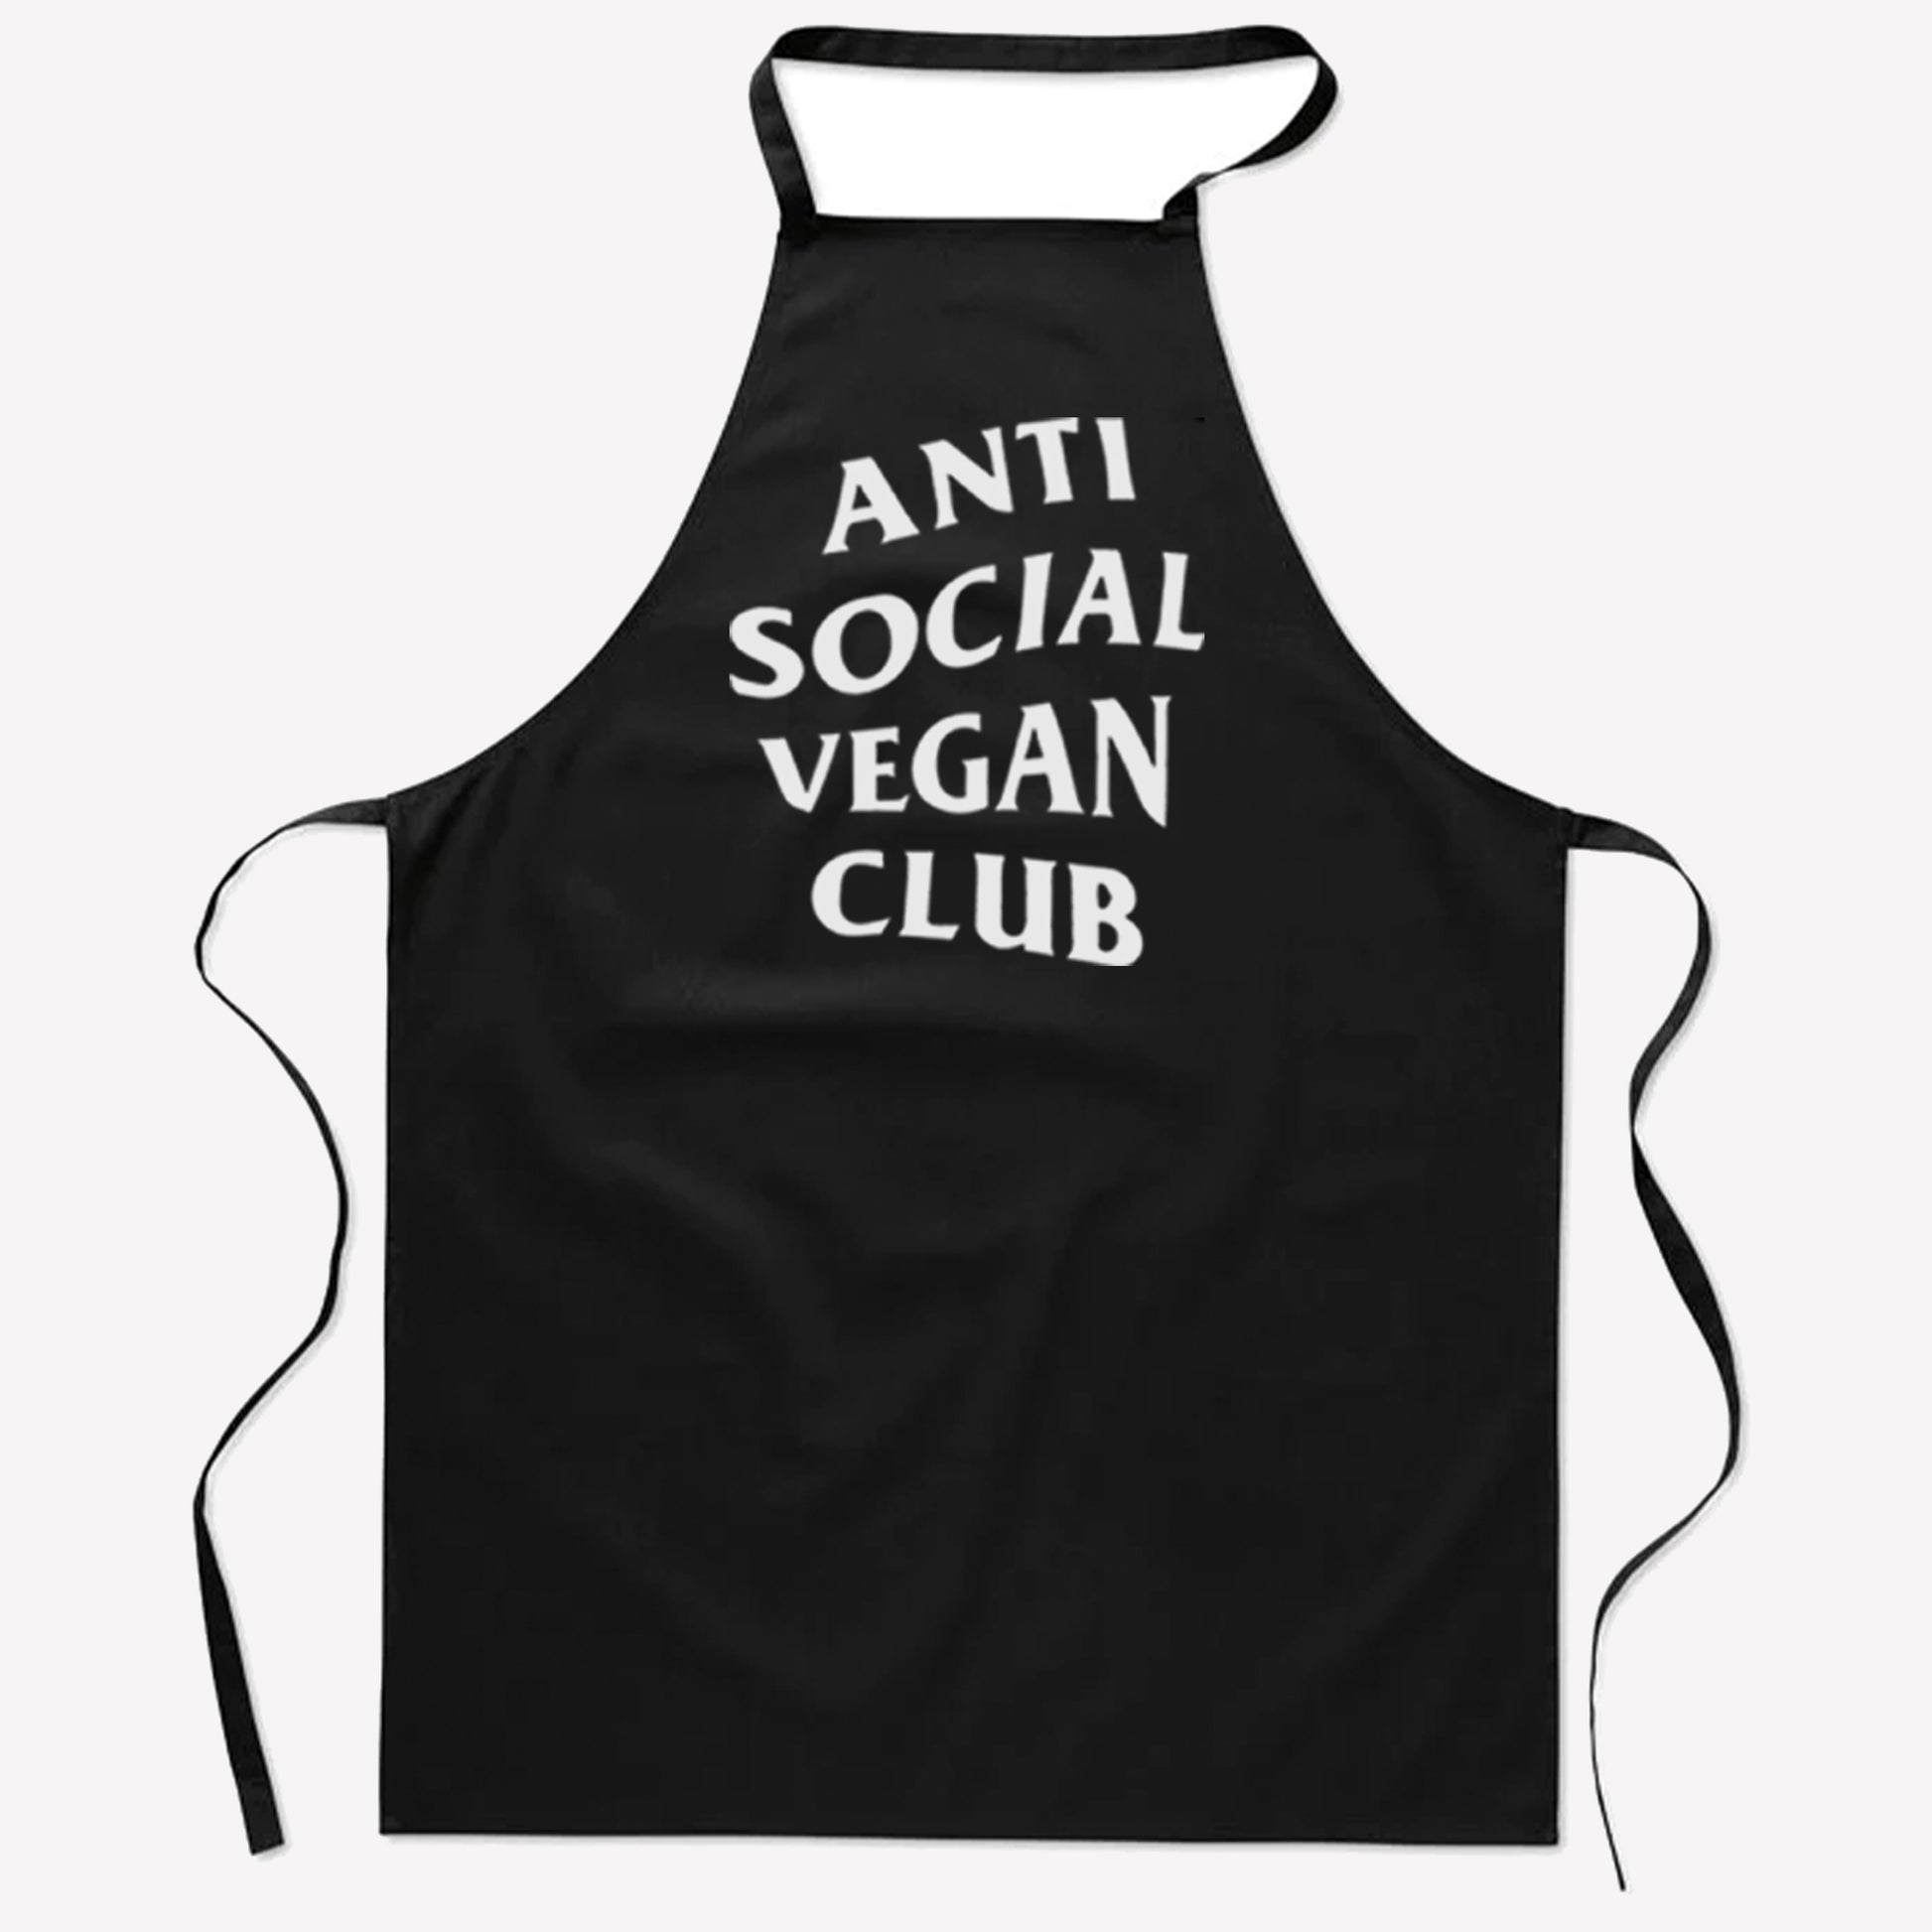 Anti Social Vegan Club Apron - Anti Social Vegan Club